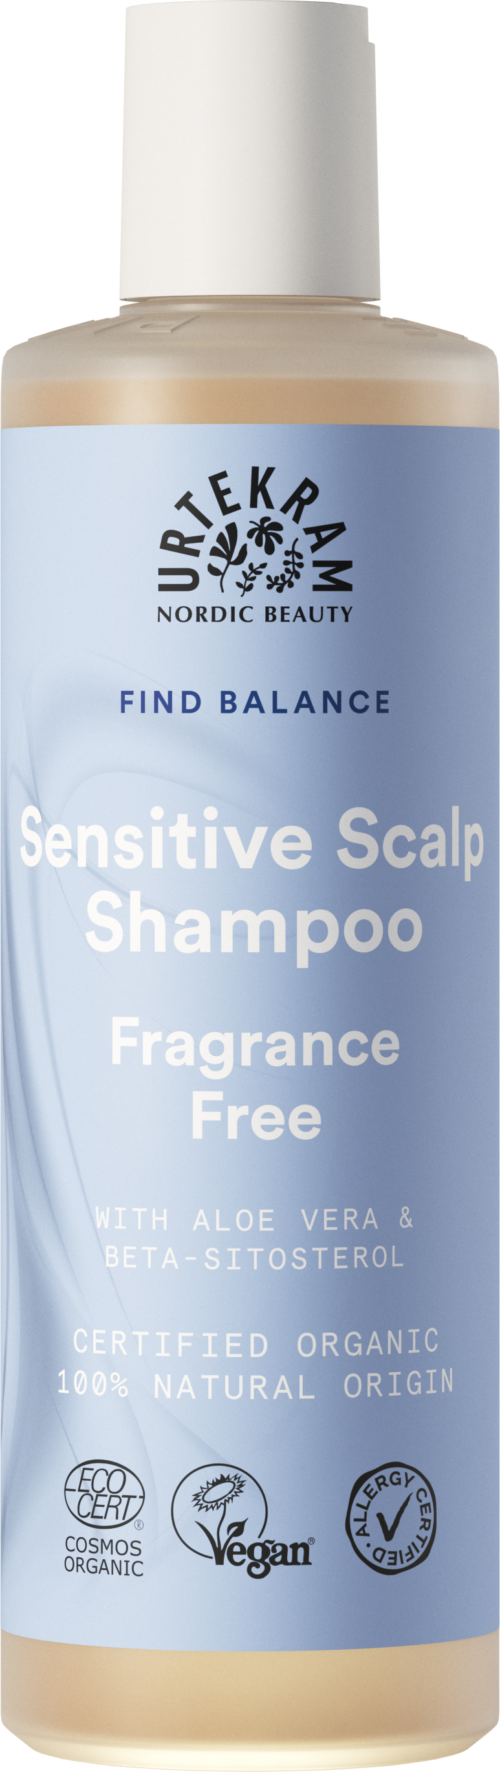 Find balance shampoo geurvrij 250ml Urtekram